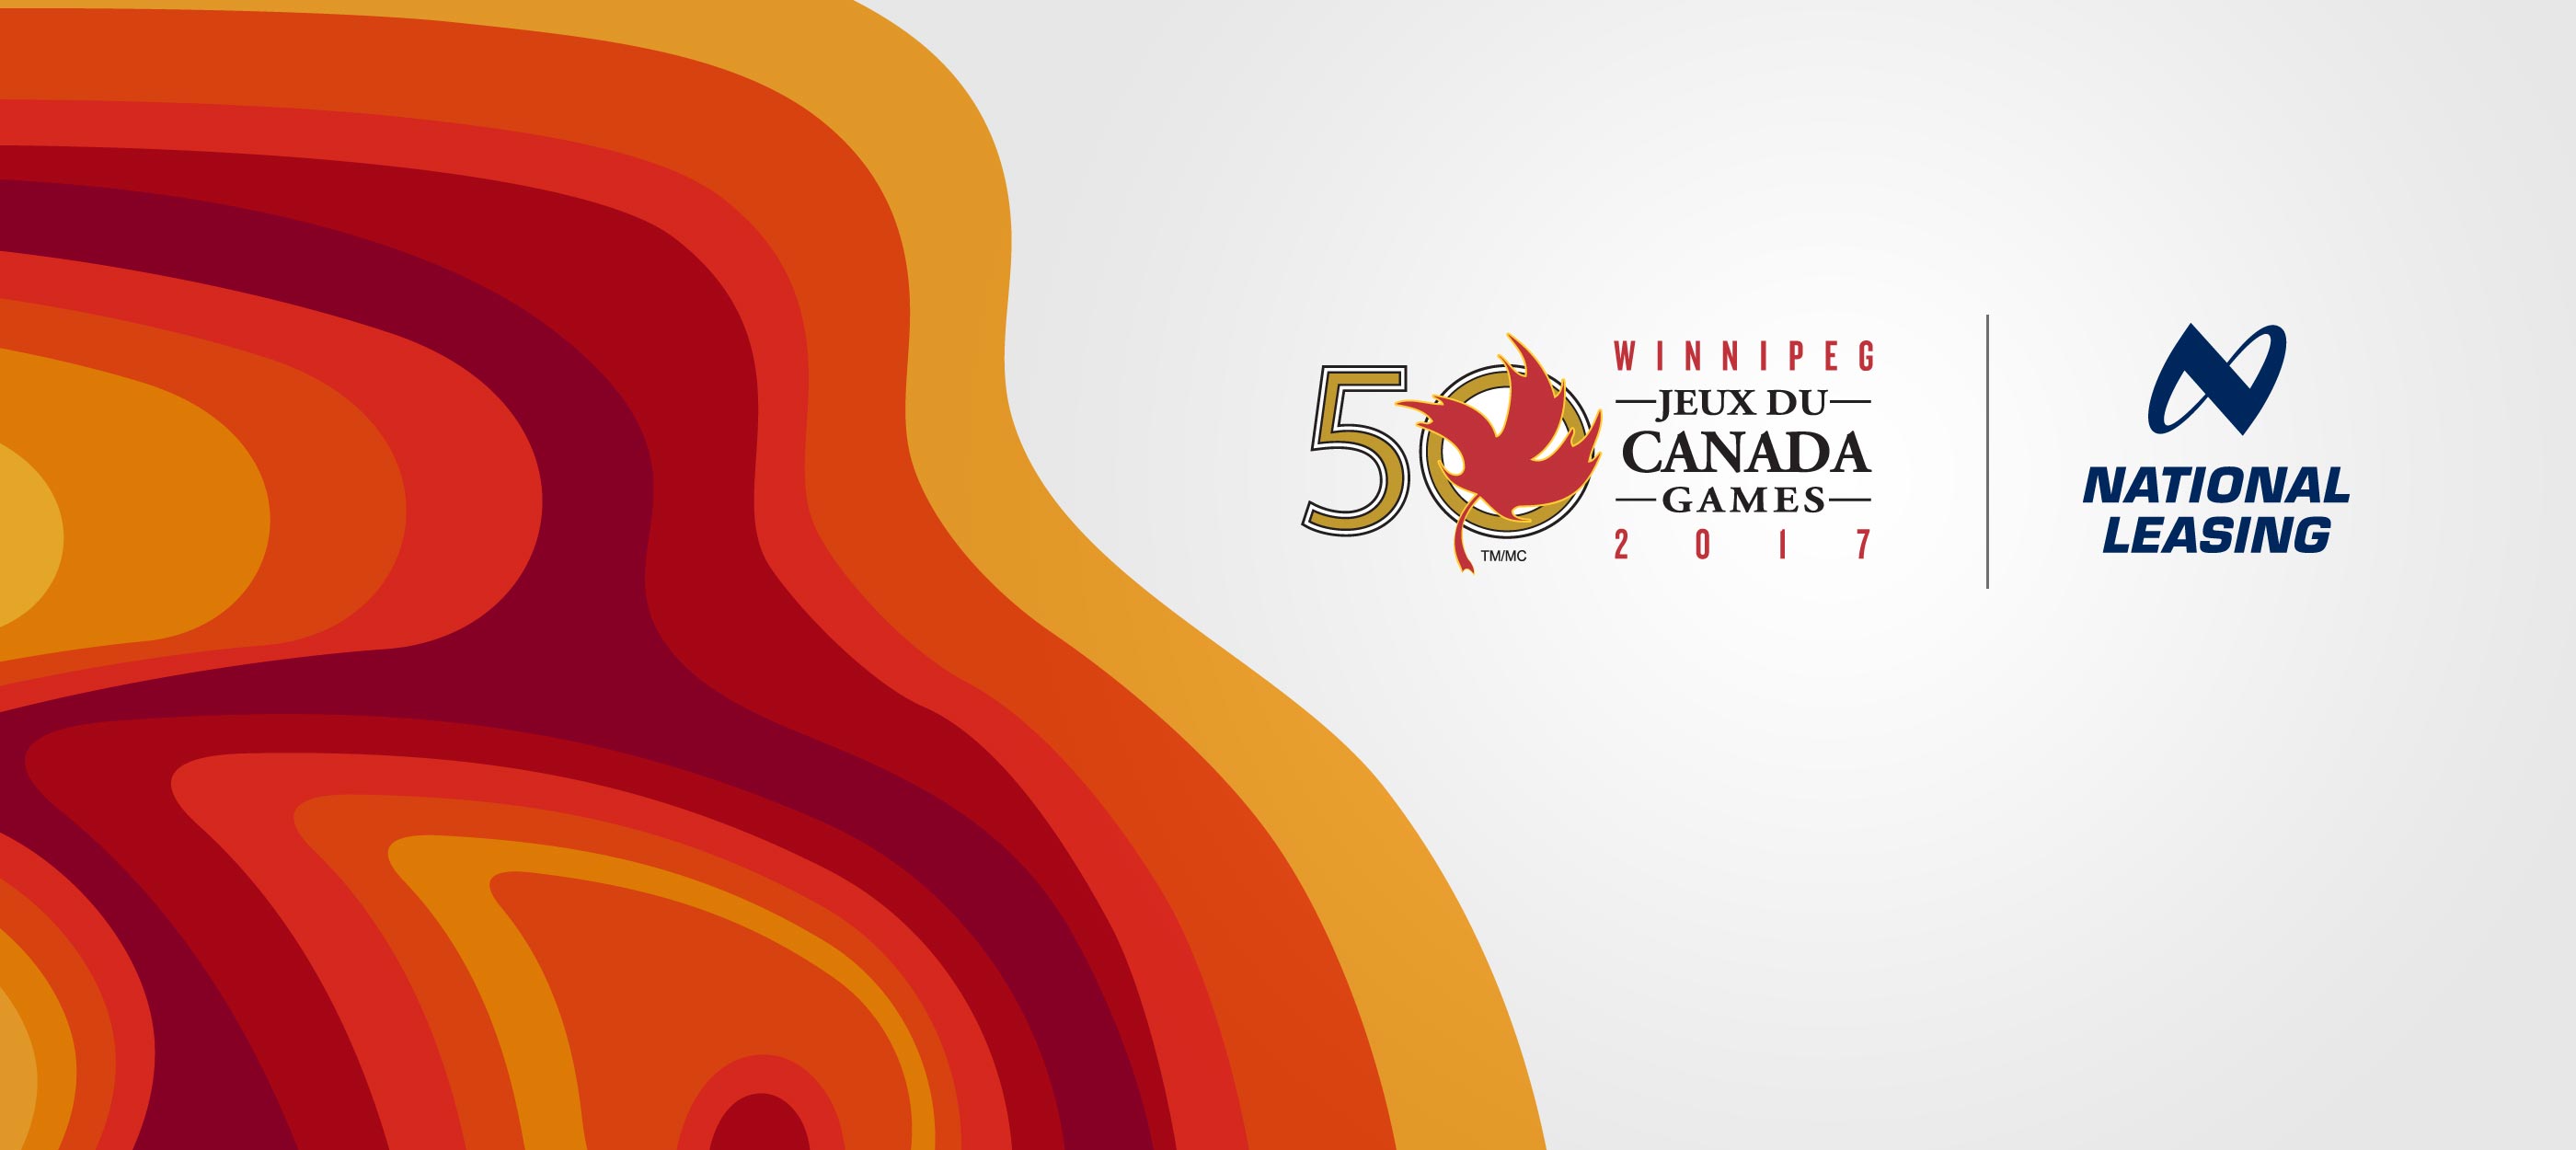 Canada Games logo and CWB National Leasing logo